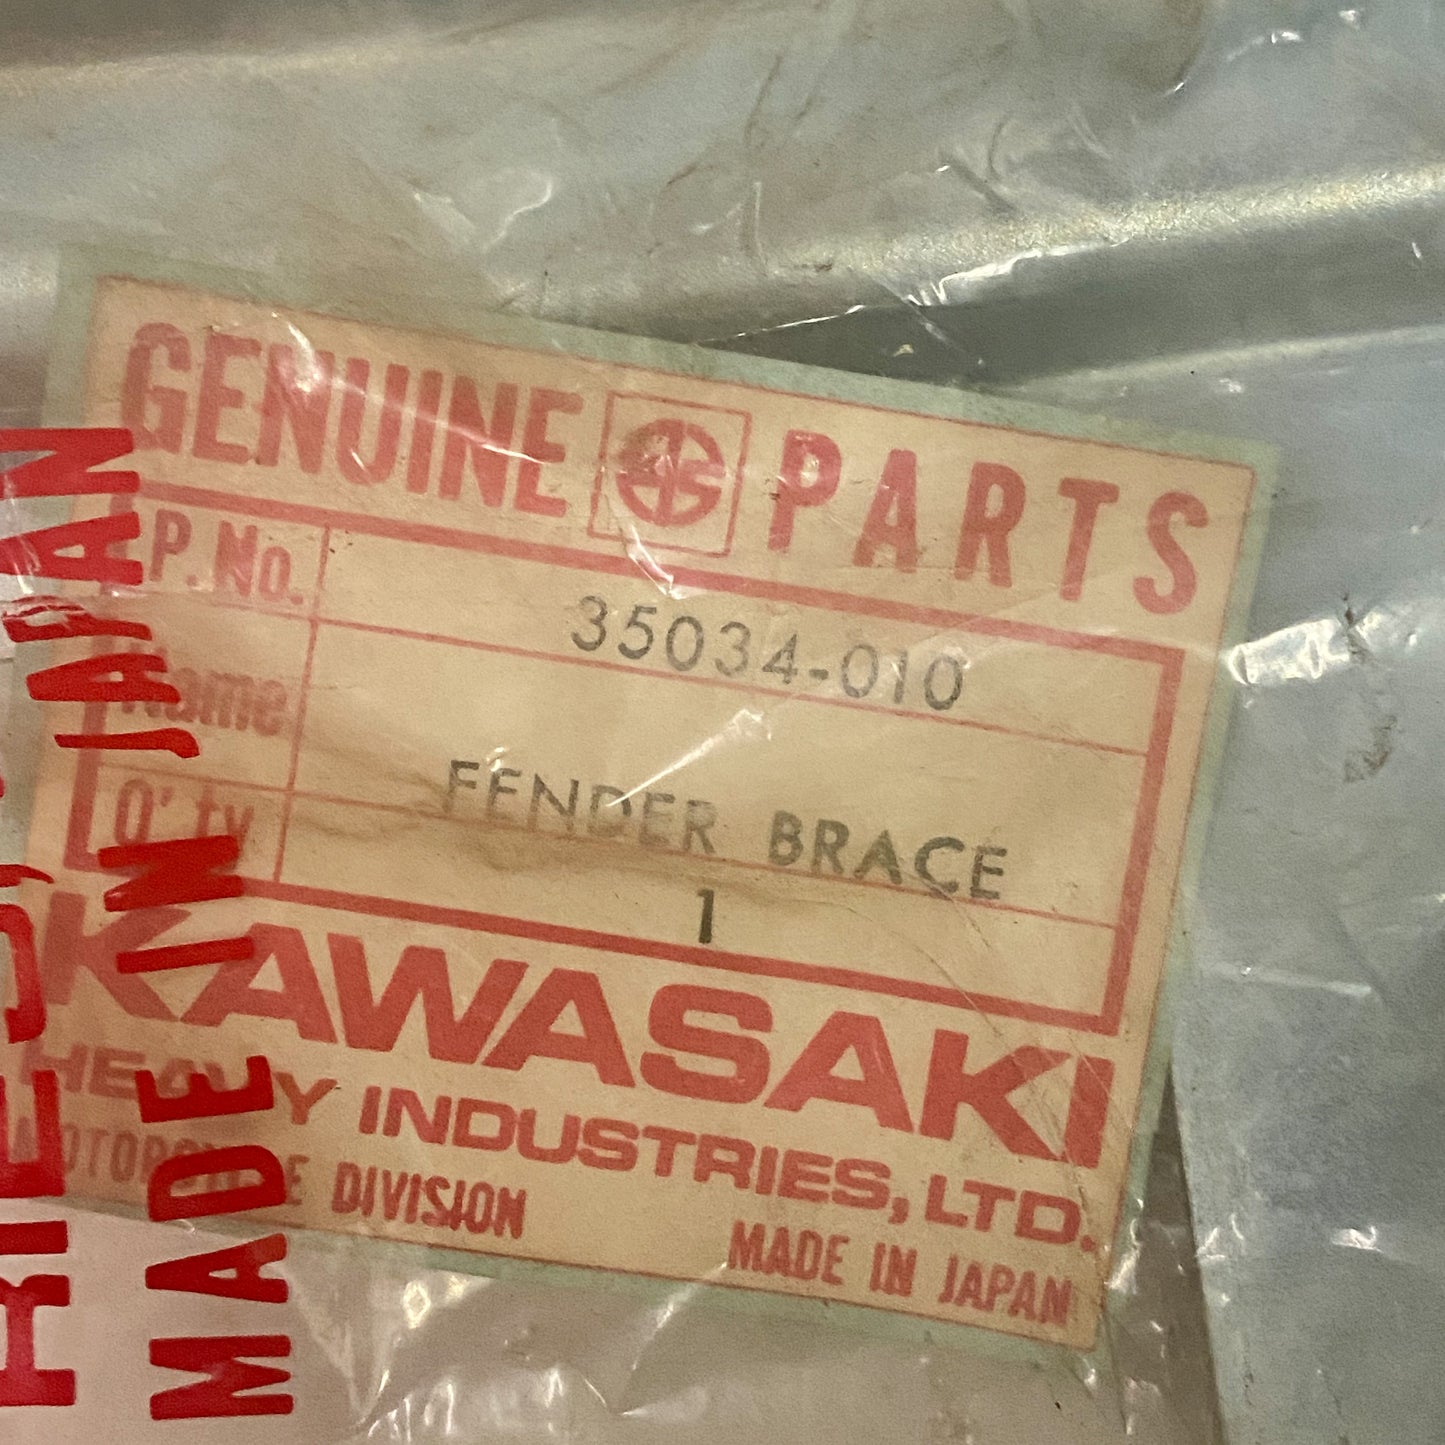 Kawasaki BRACE-REAR FENDER 35034-010 NOS